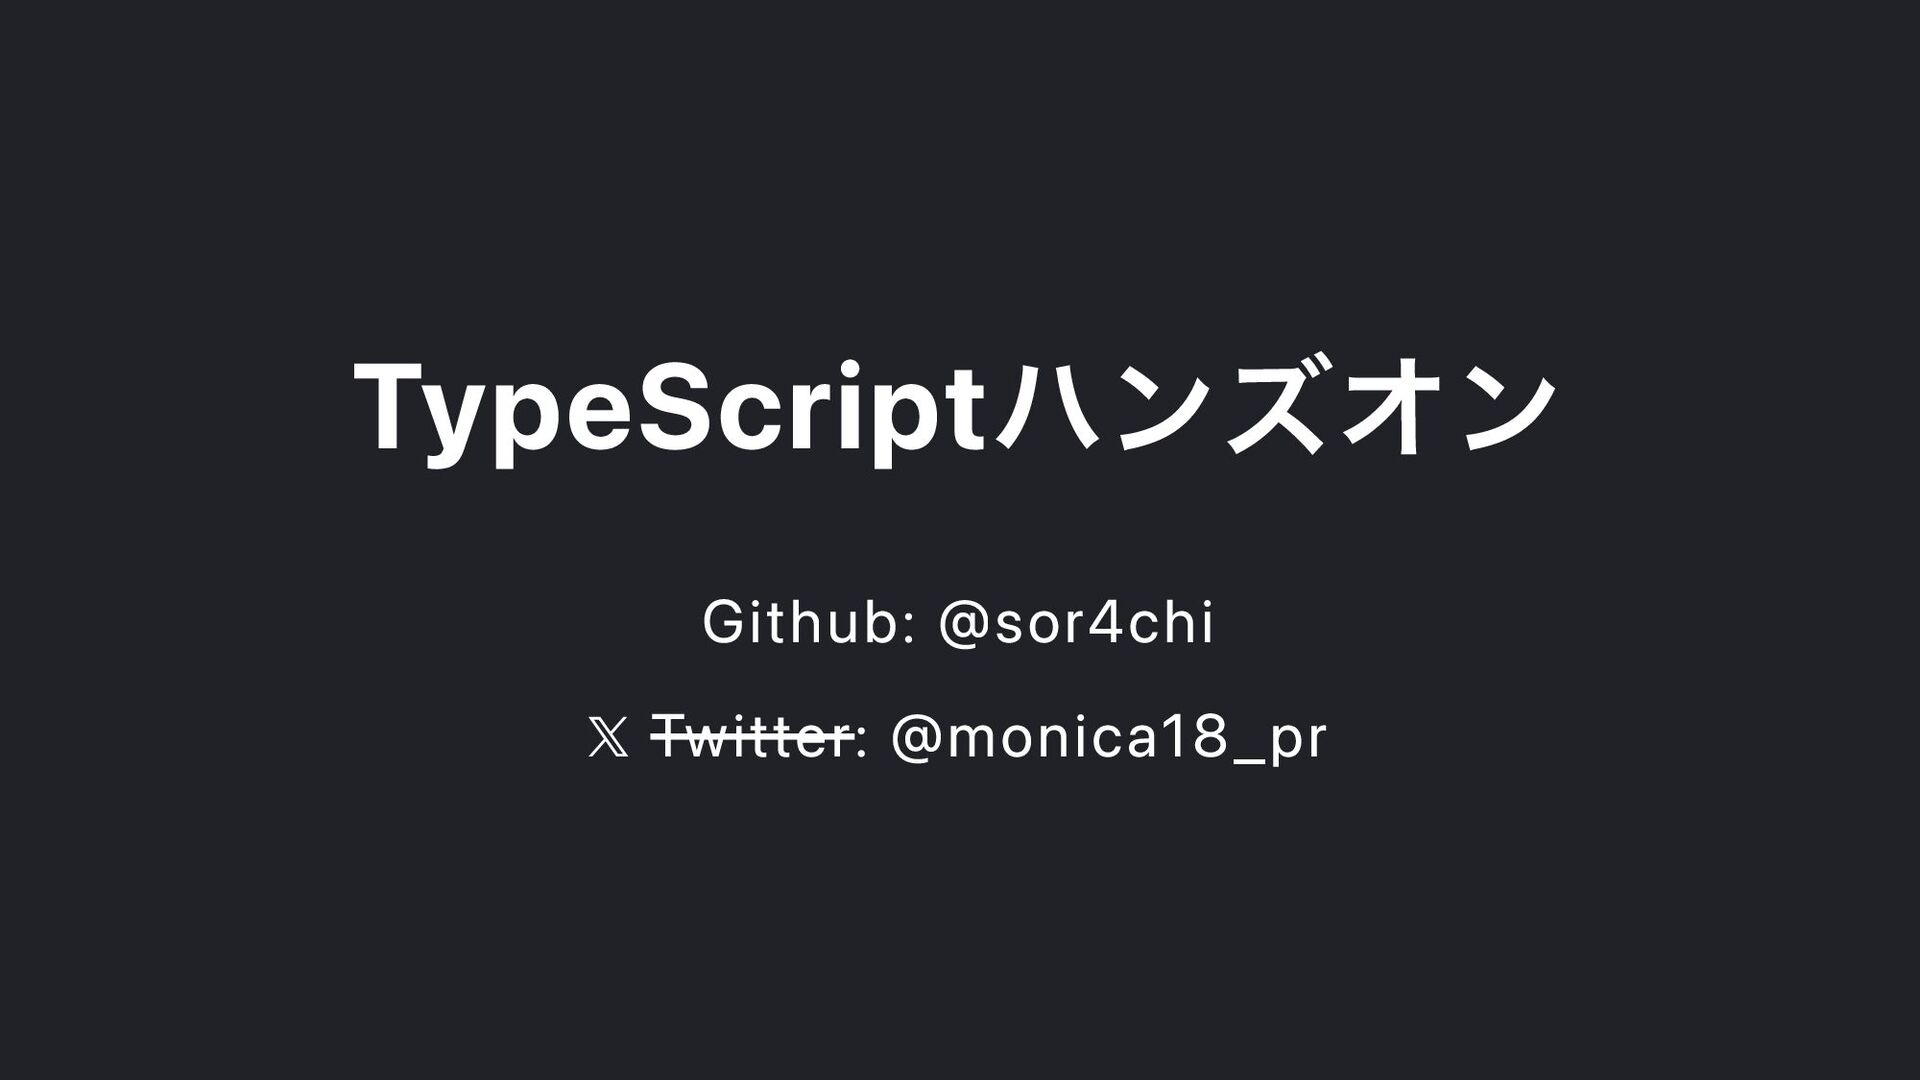 TypeScript ハンズオン